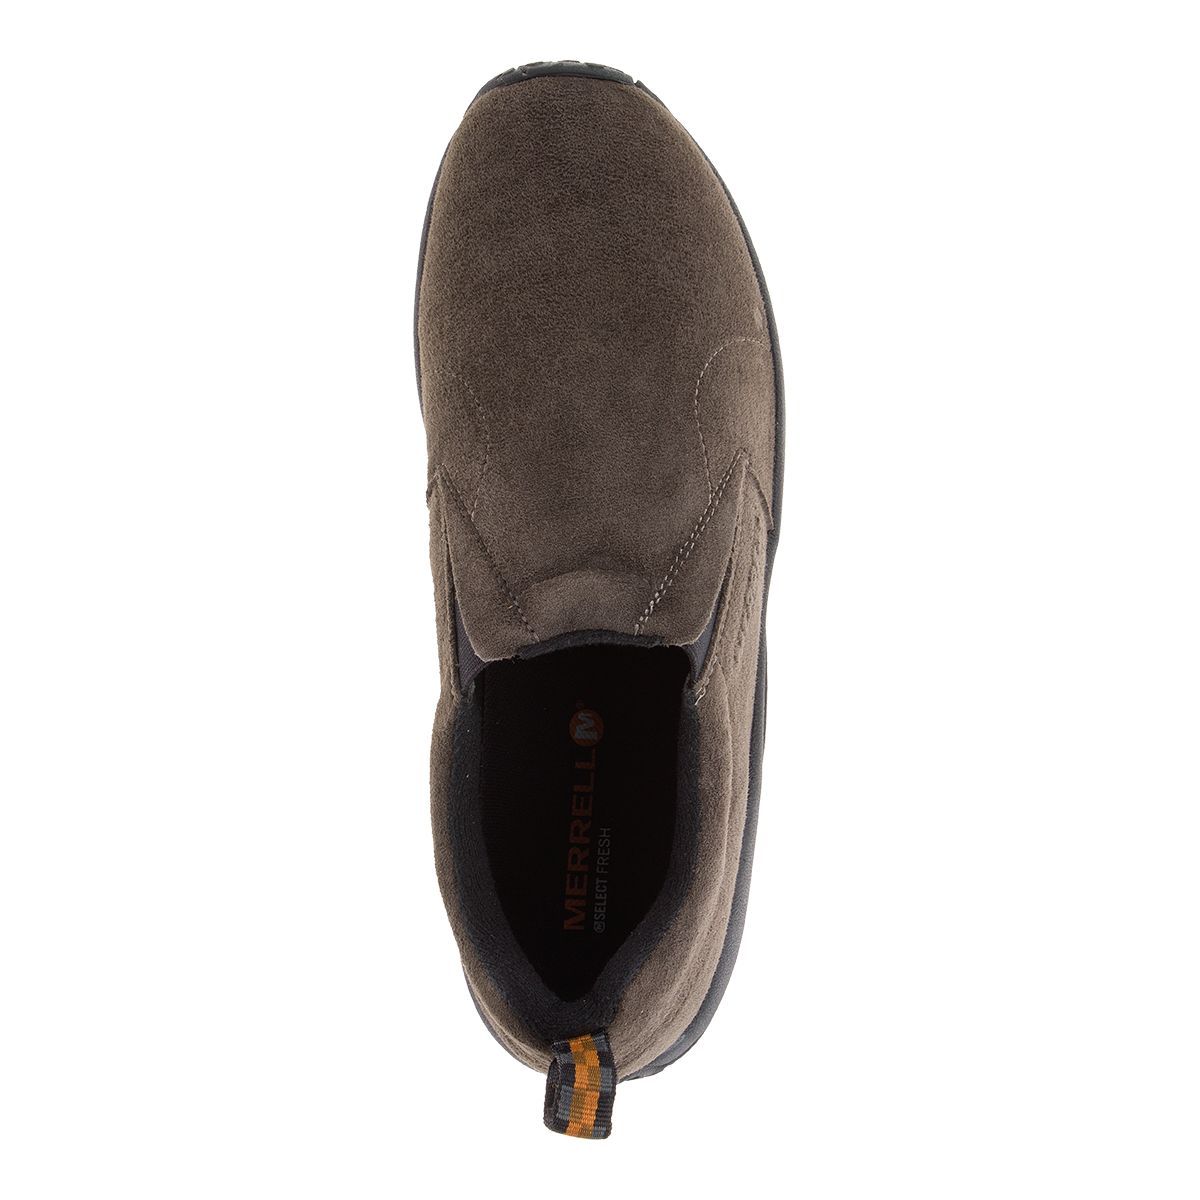 Merrell Shoes: Men's J63839W Brown Nubuck Jungle Moc Slip-On Shoes